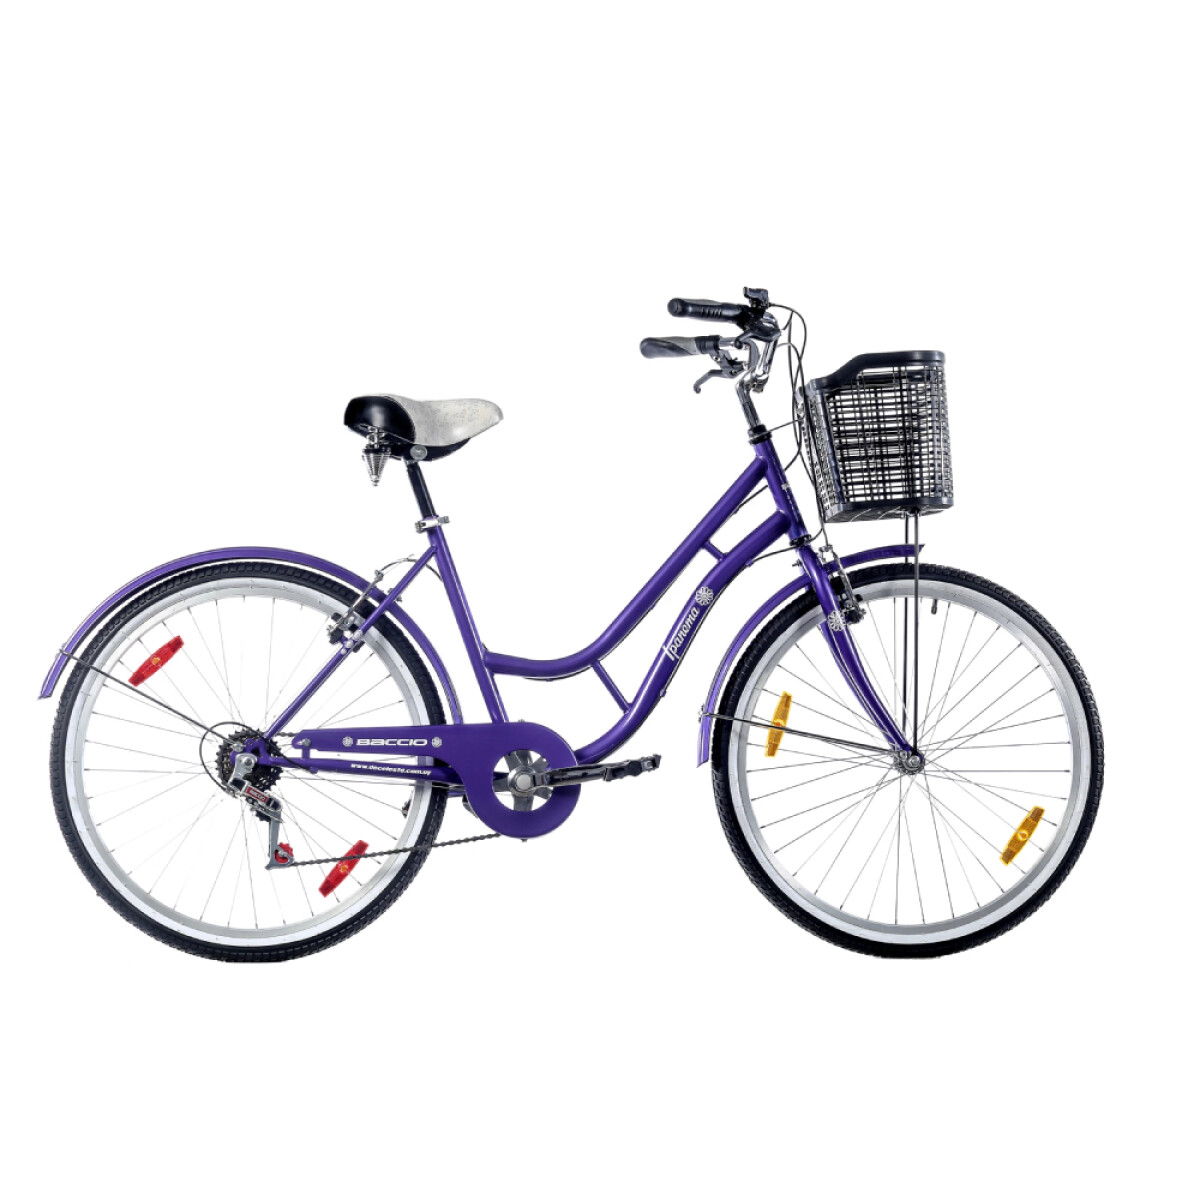 Bicicleta Baccio Ipanema Lady Rodado 26 6 Velocidades - Violeta 